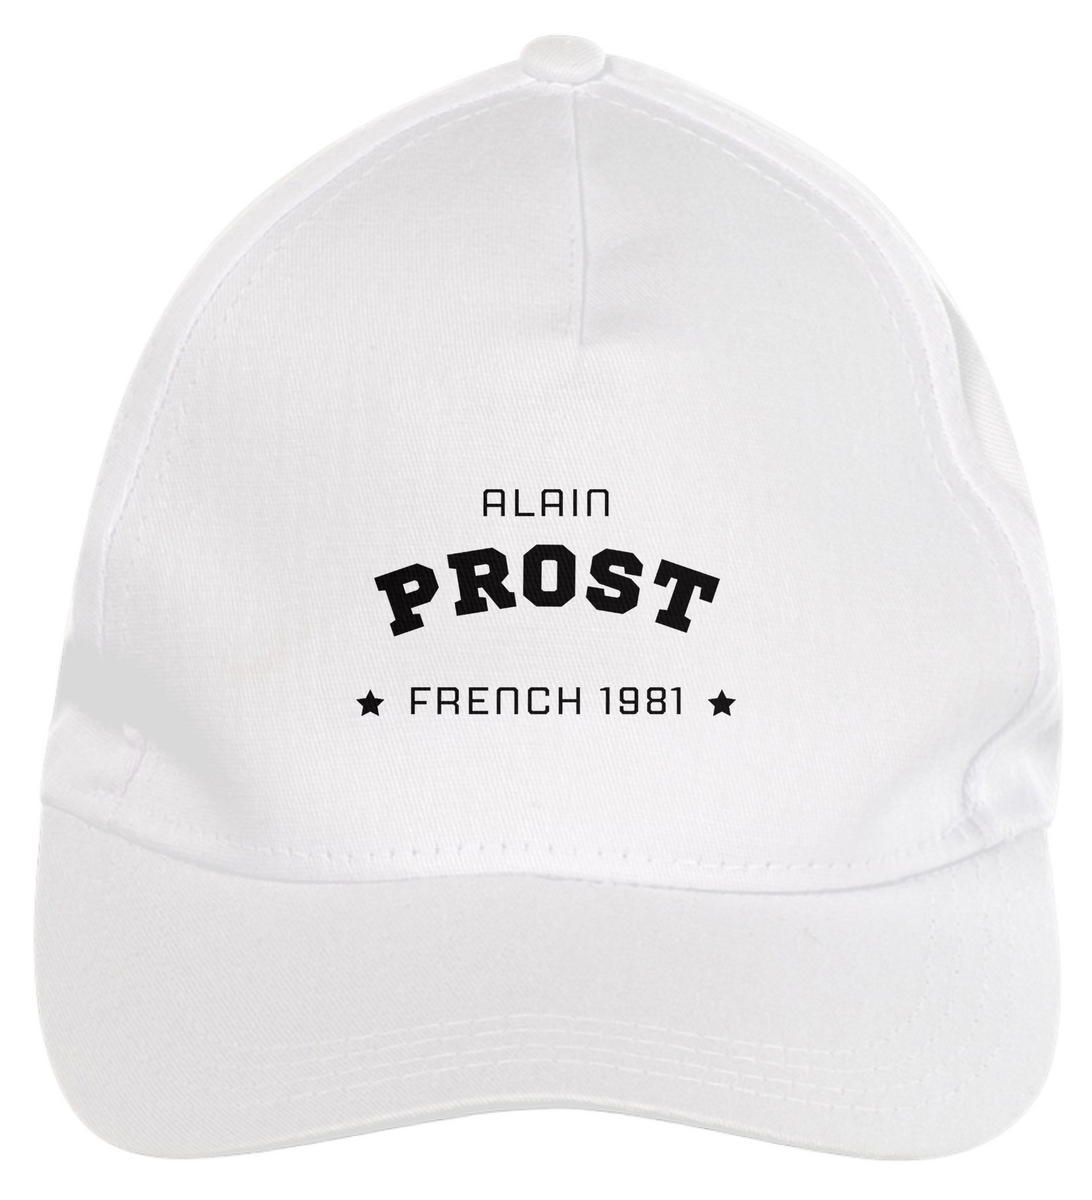 Nome do produto: Alain Prost - French 1981